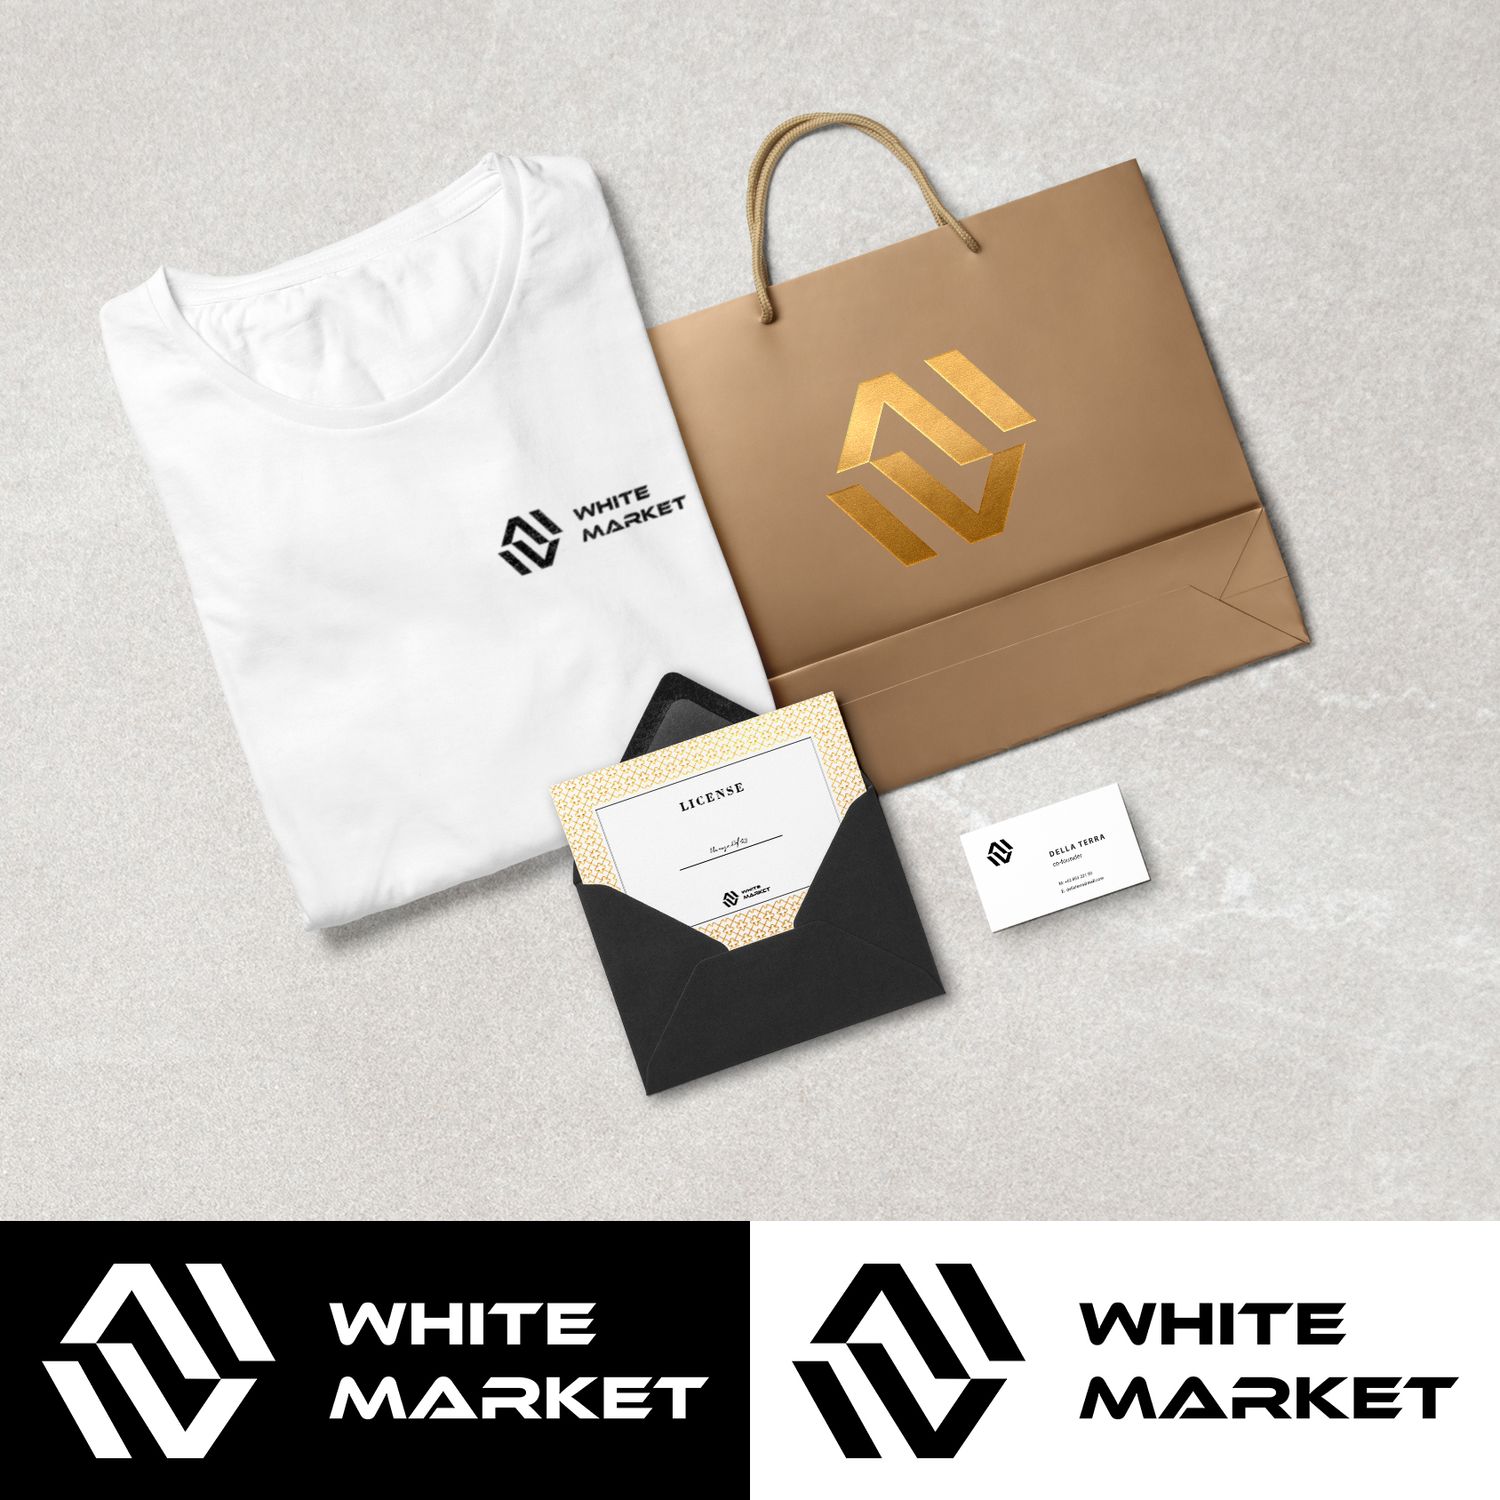 whitemarketgroup | Sign Up for Enjoying Best Content